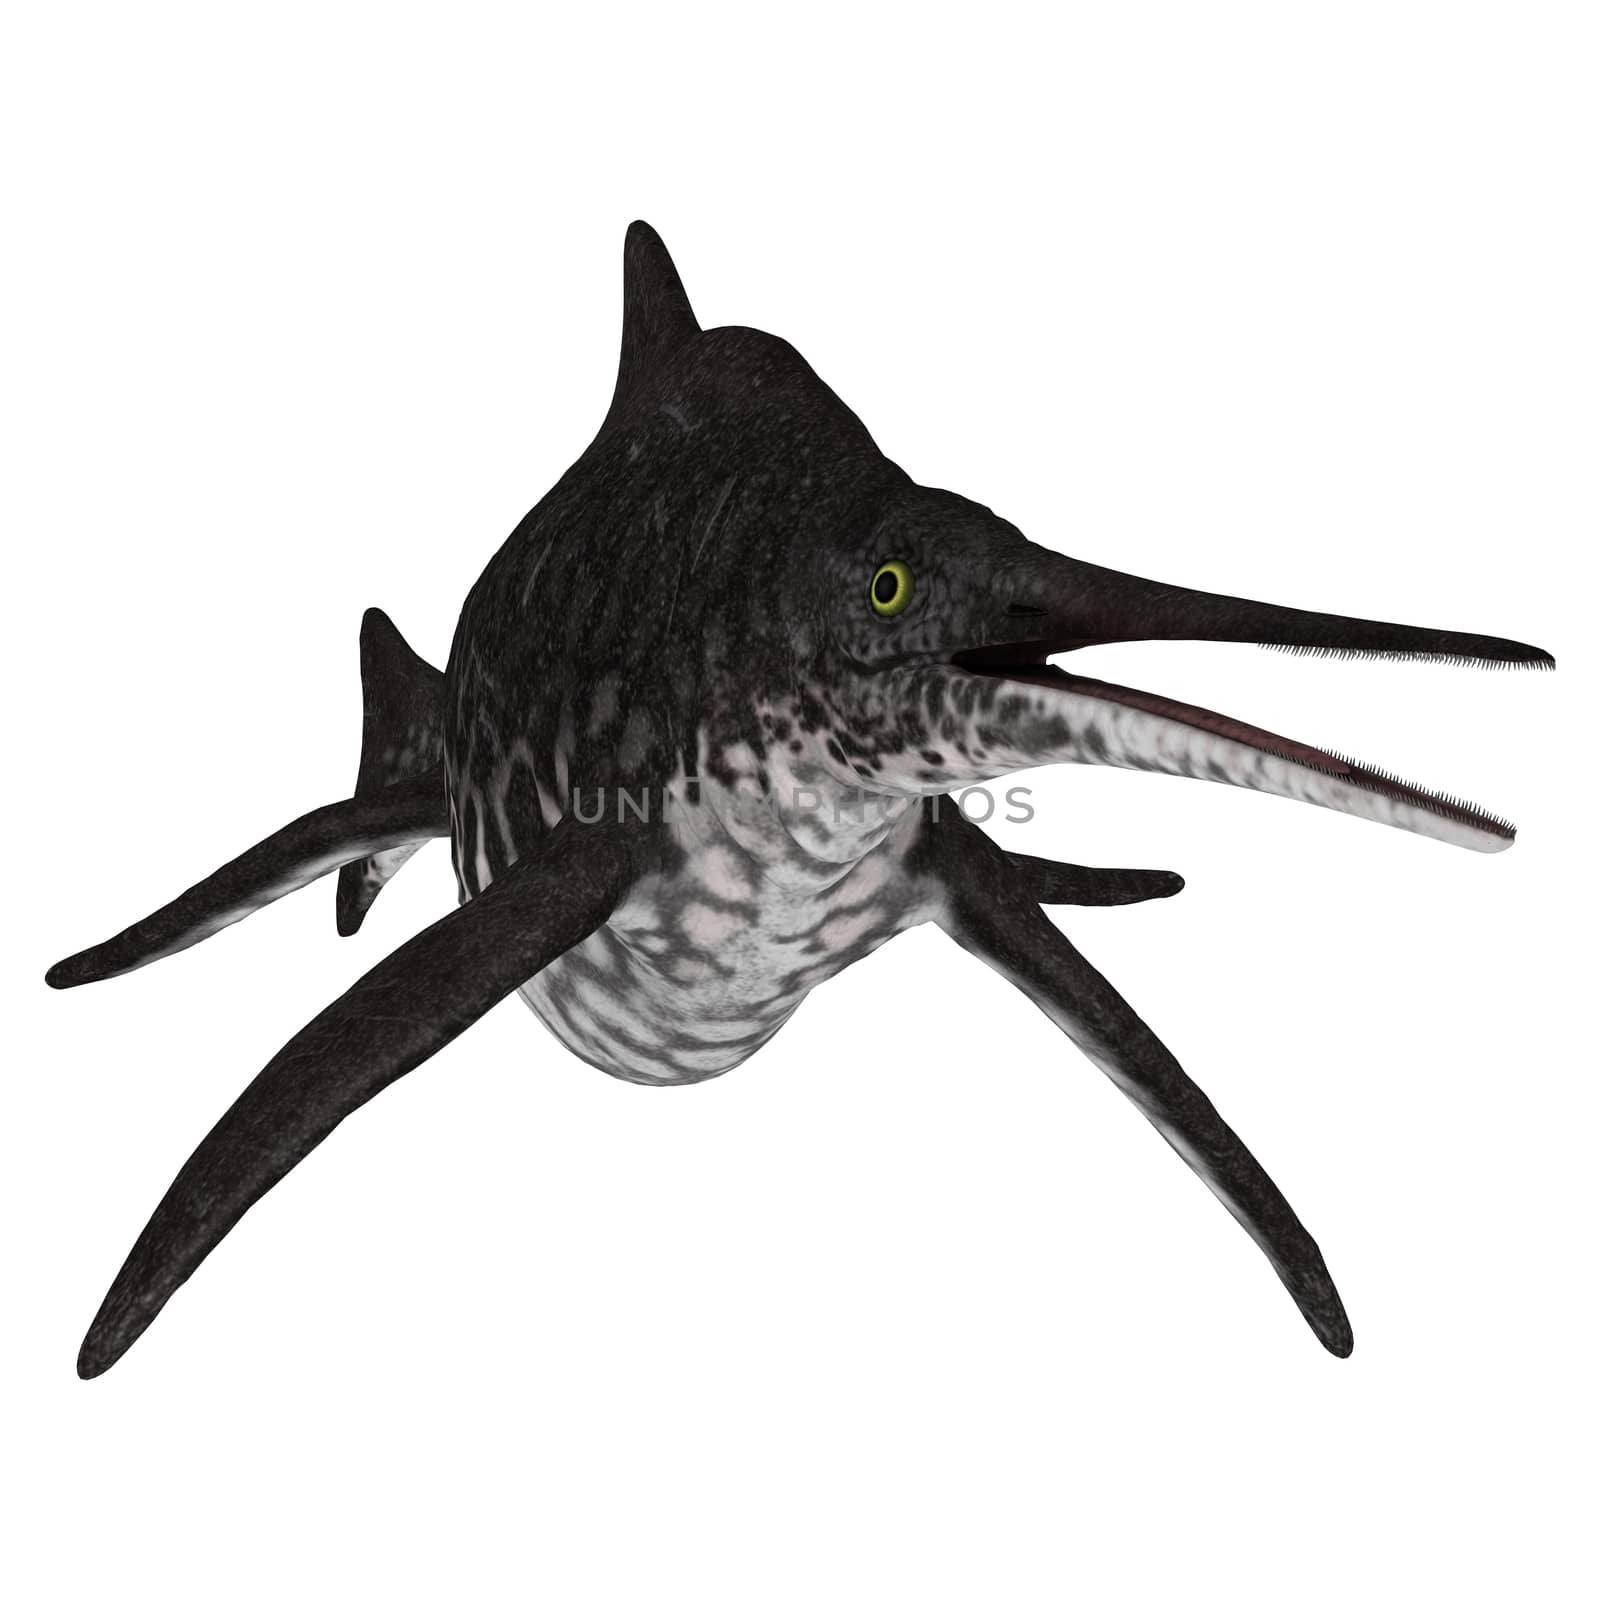 3D digital render of an ichthyosaur shonisaurus isolated on white background